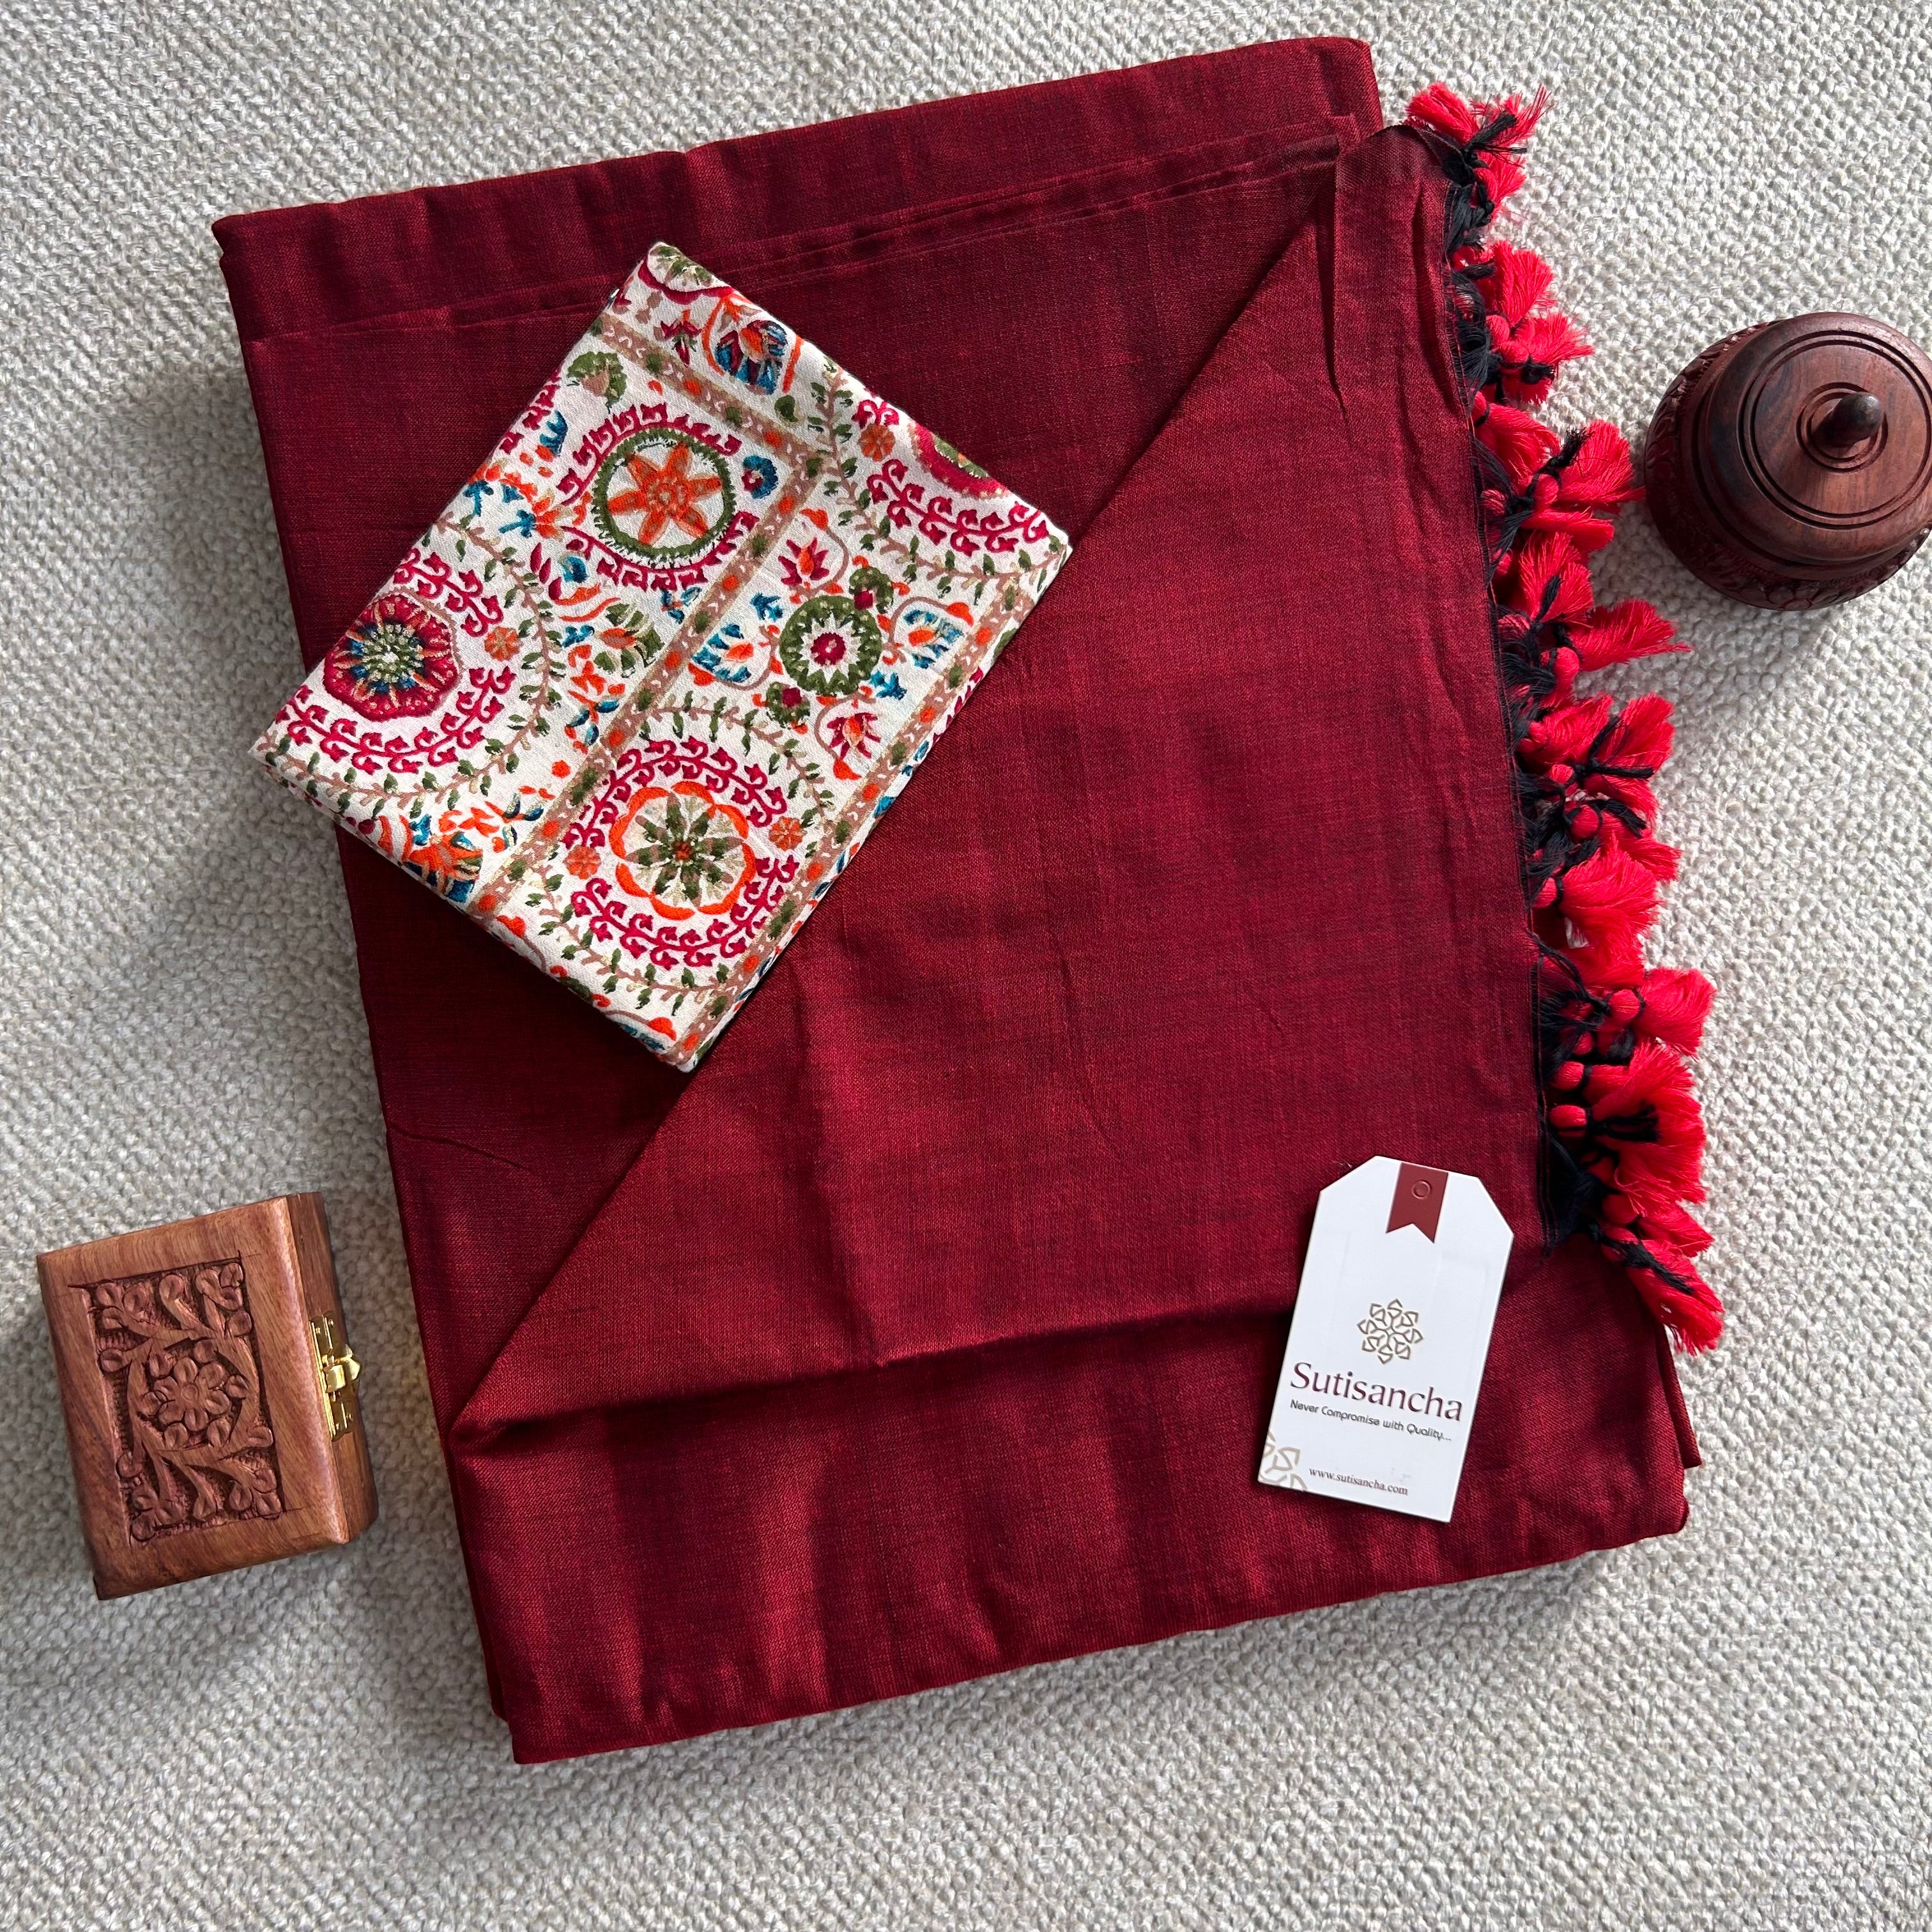 Sutisancha Cherry Red Khadi Saree With Designer Foil Printed Blouse